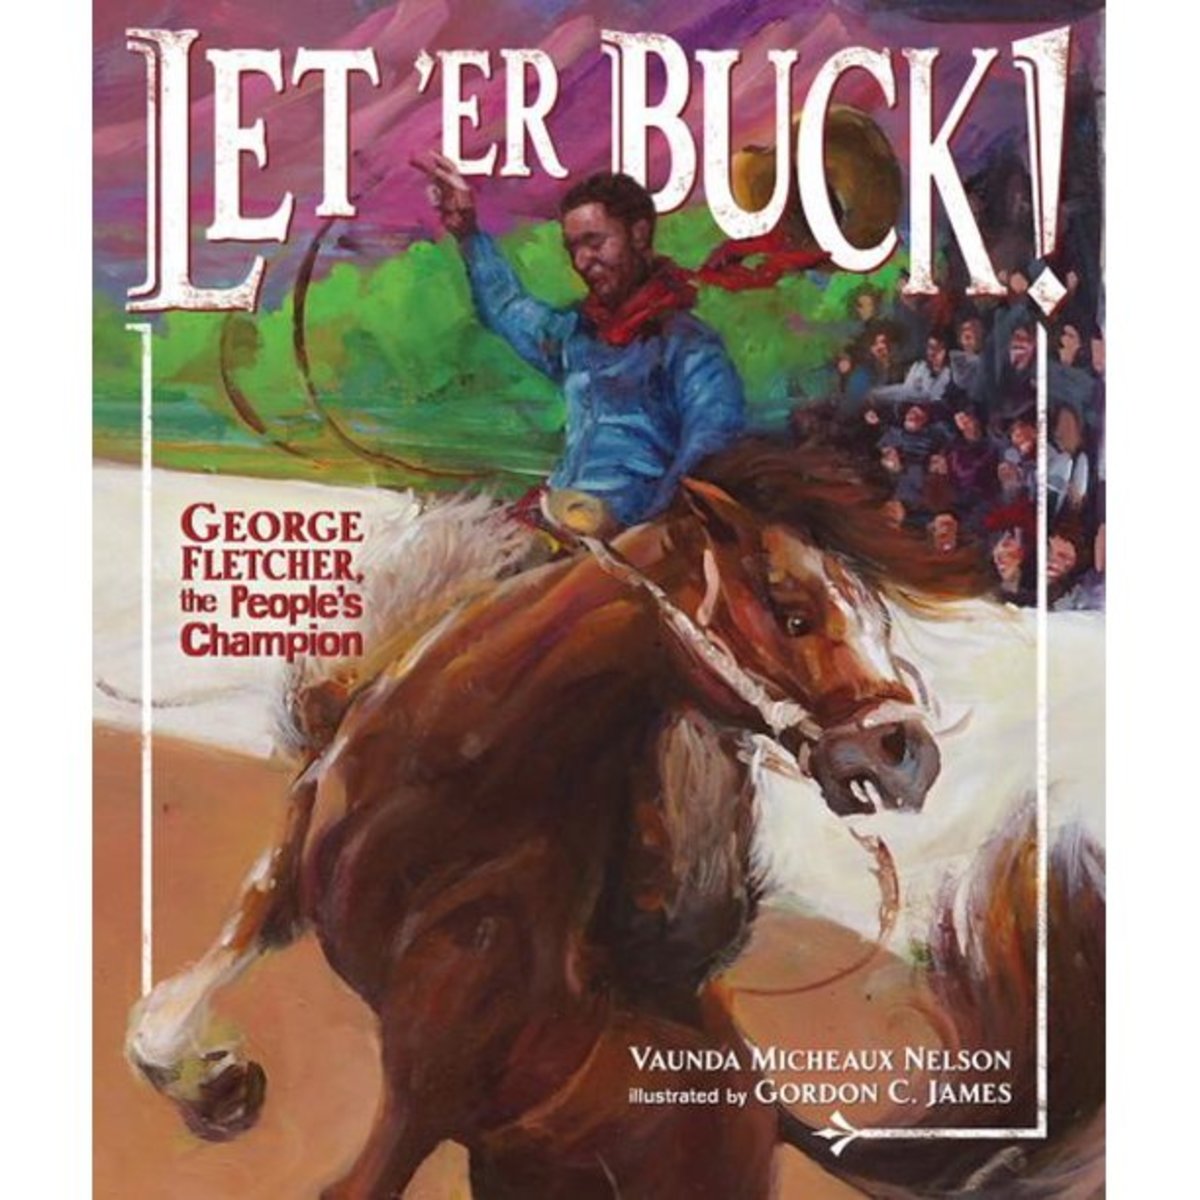 Let ‘Er Buck: George Fletcher, the People’s Champion by Vaunda Micheaux Nelson